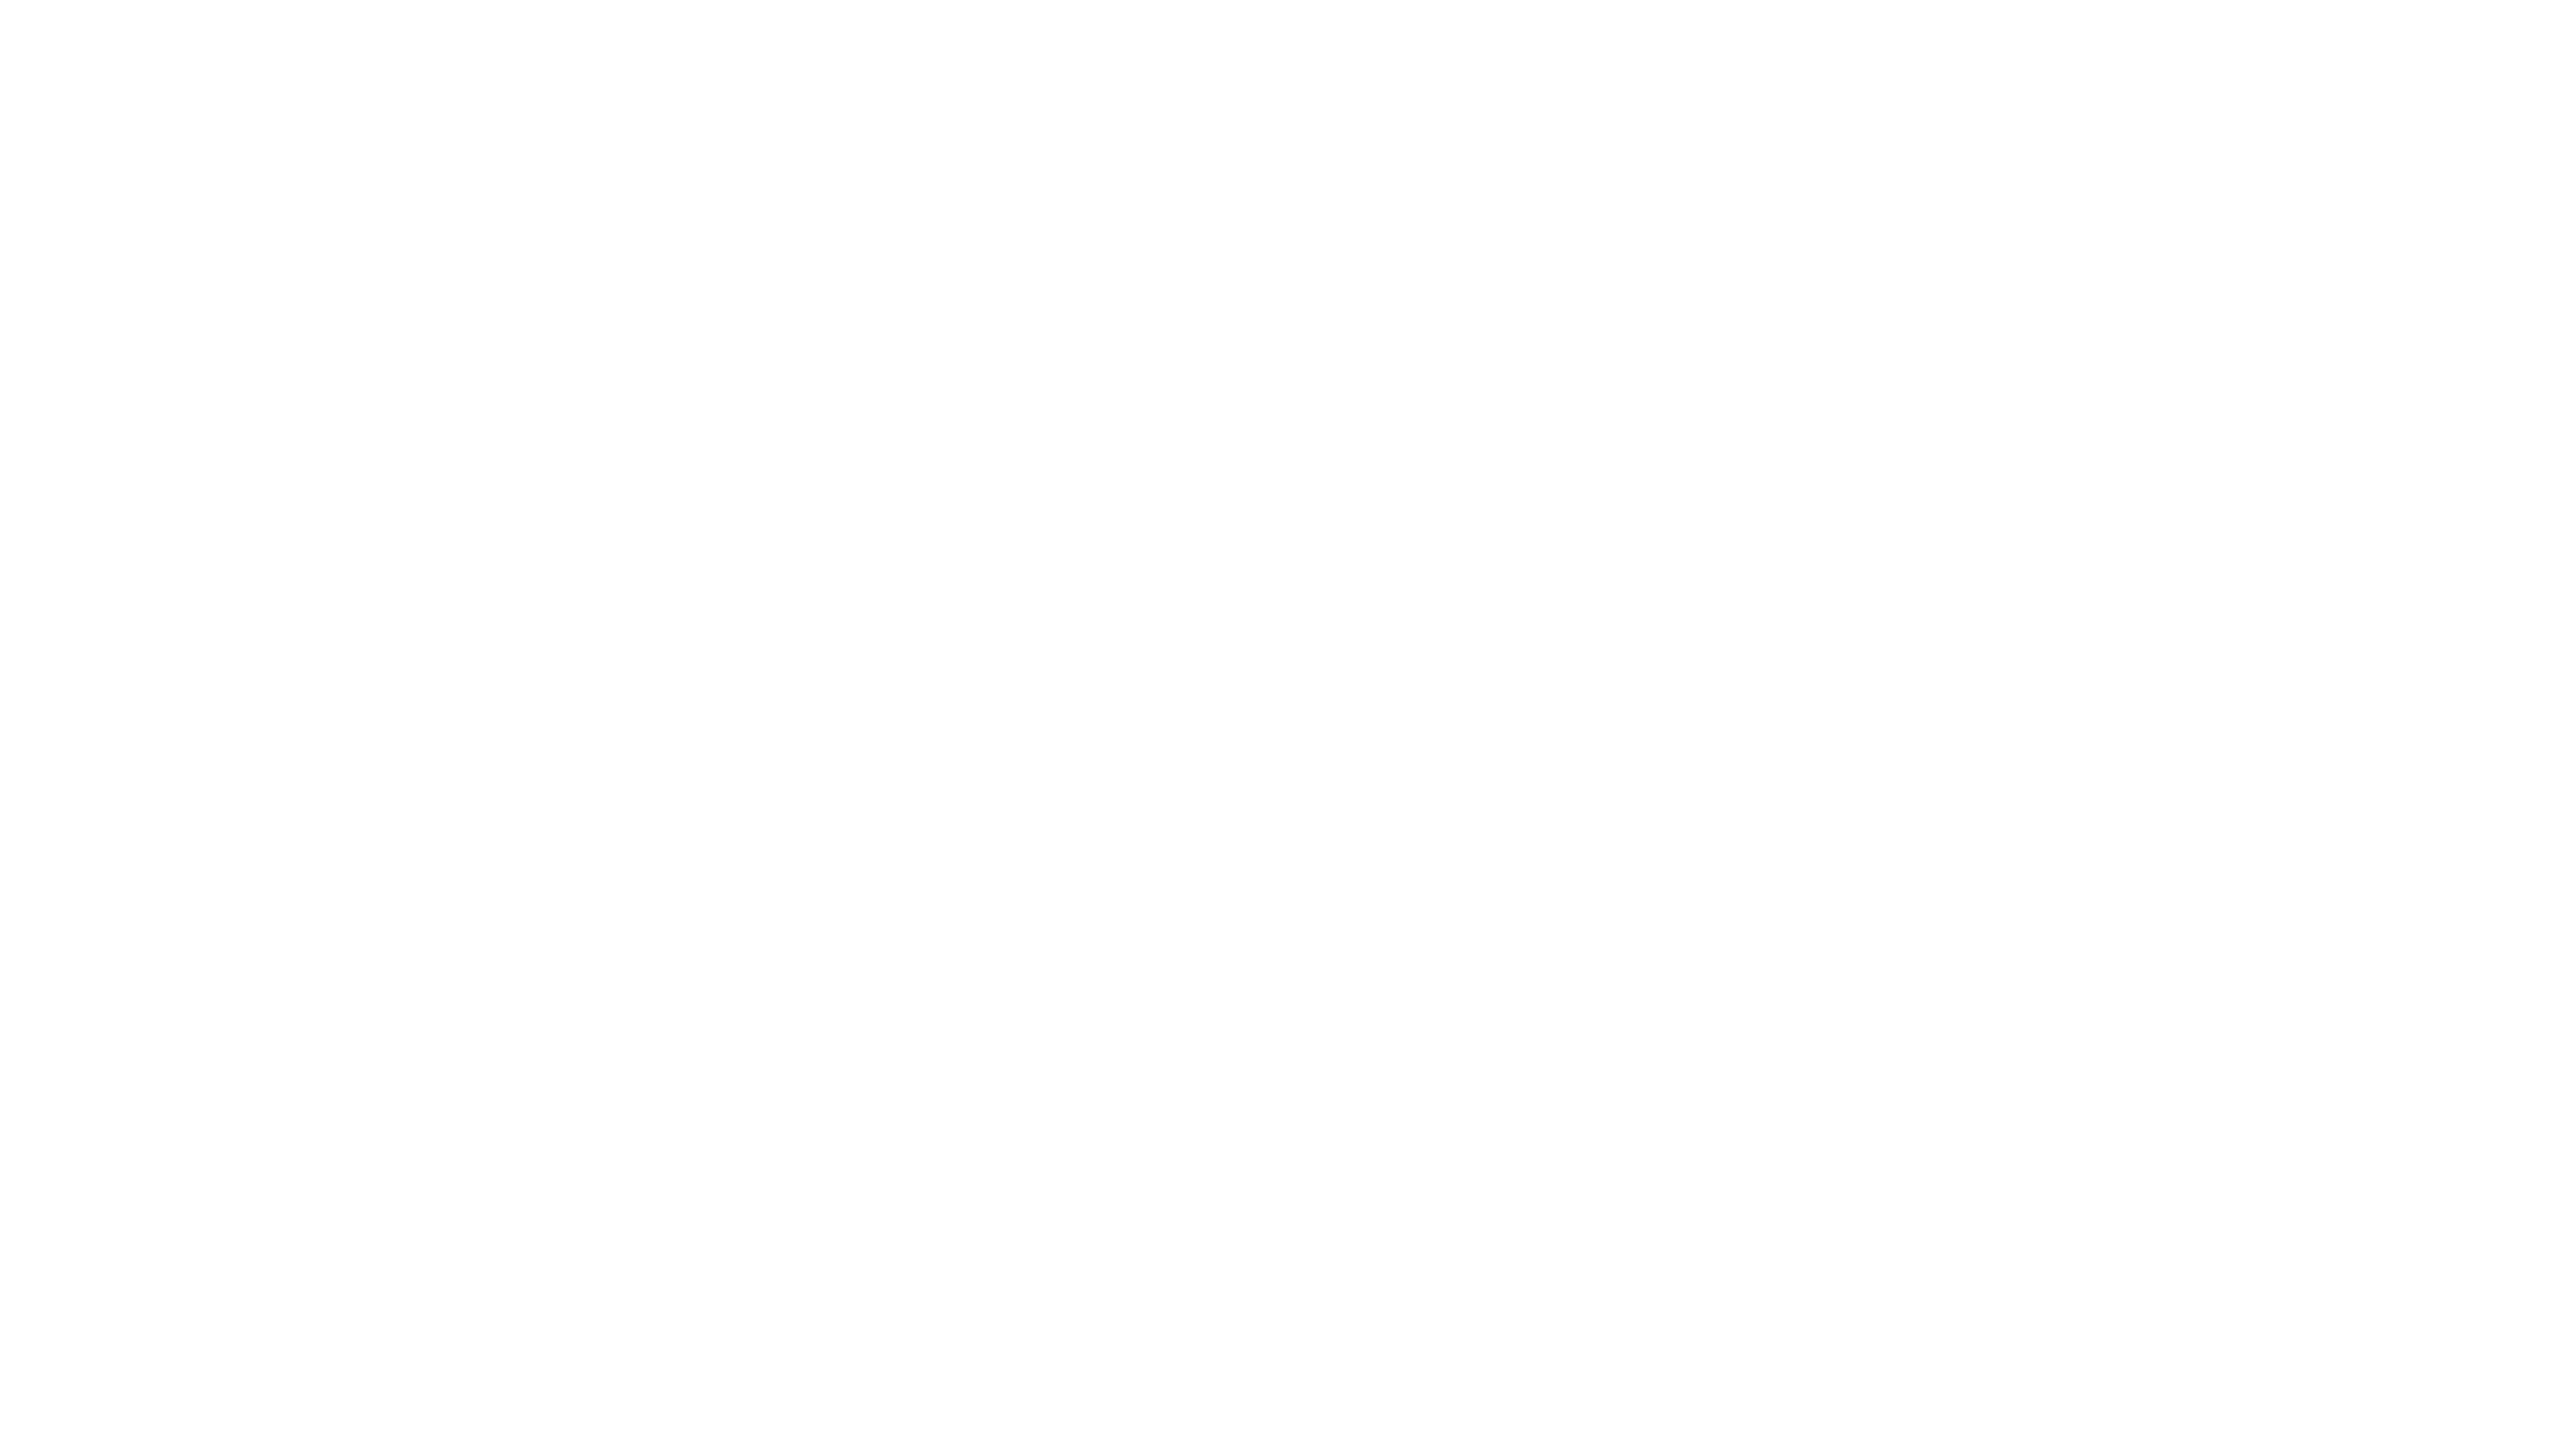 Ottobock